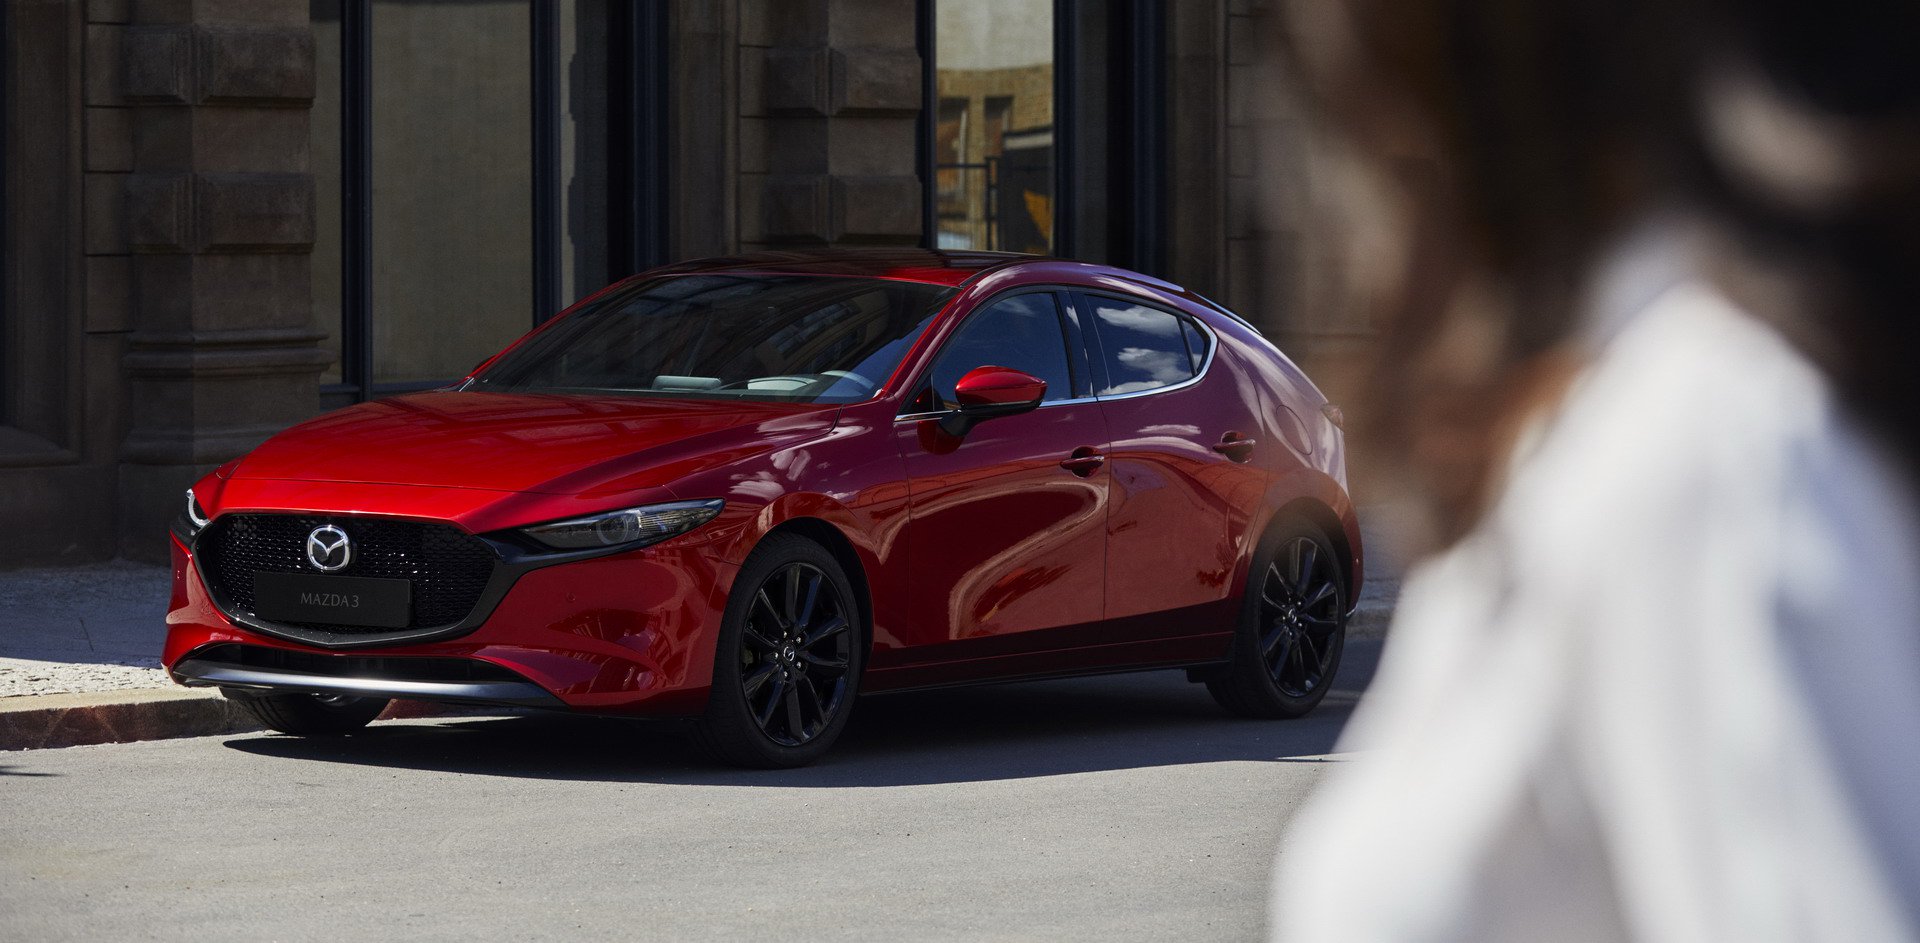 Novo Mazda3 poderá ter versão desportiva